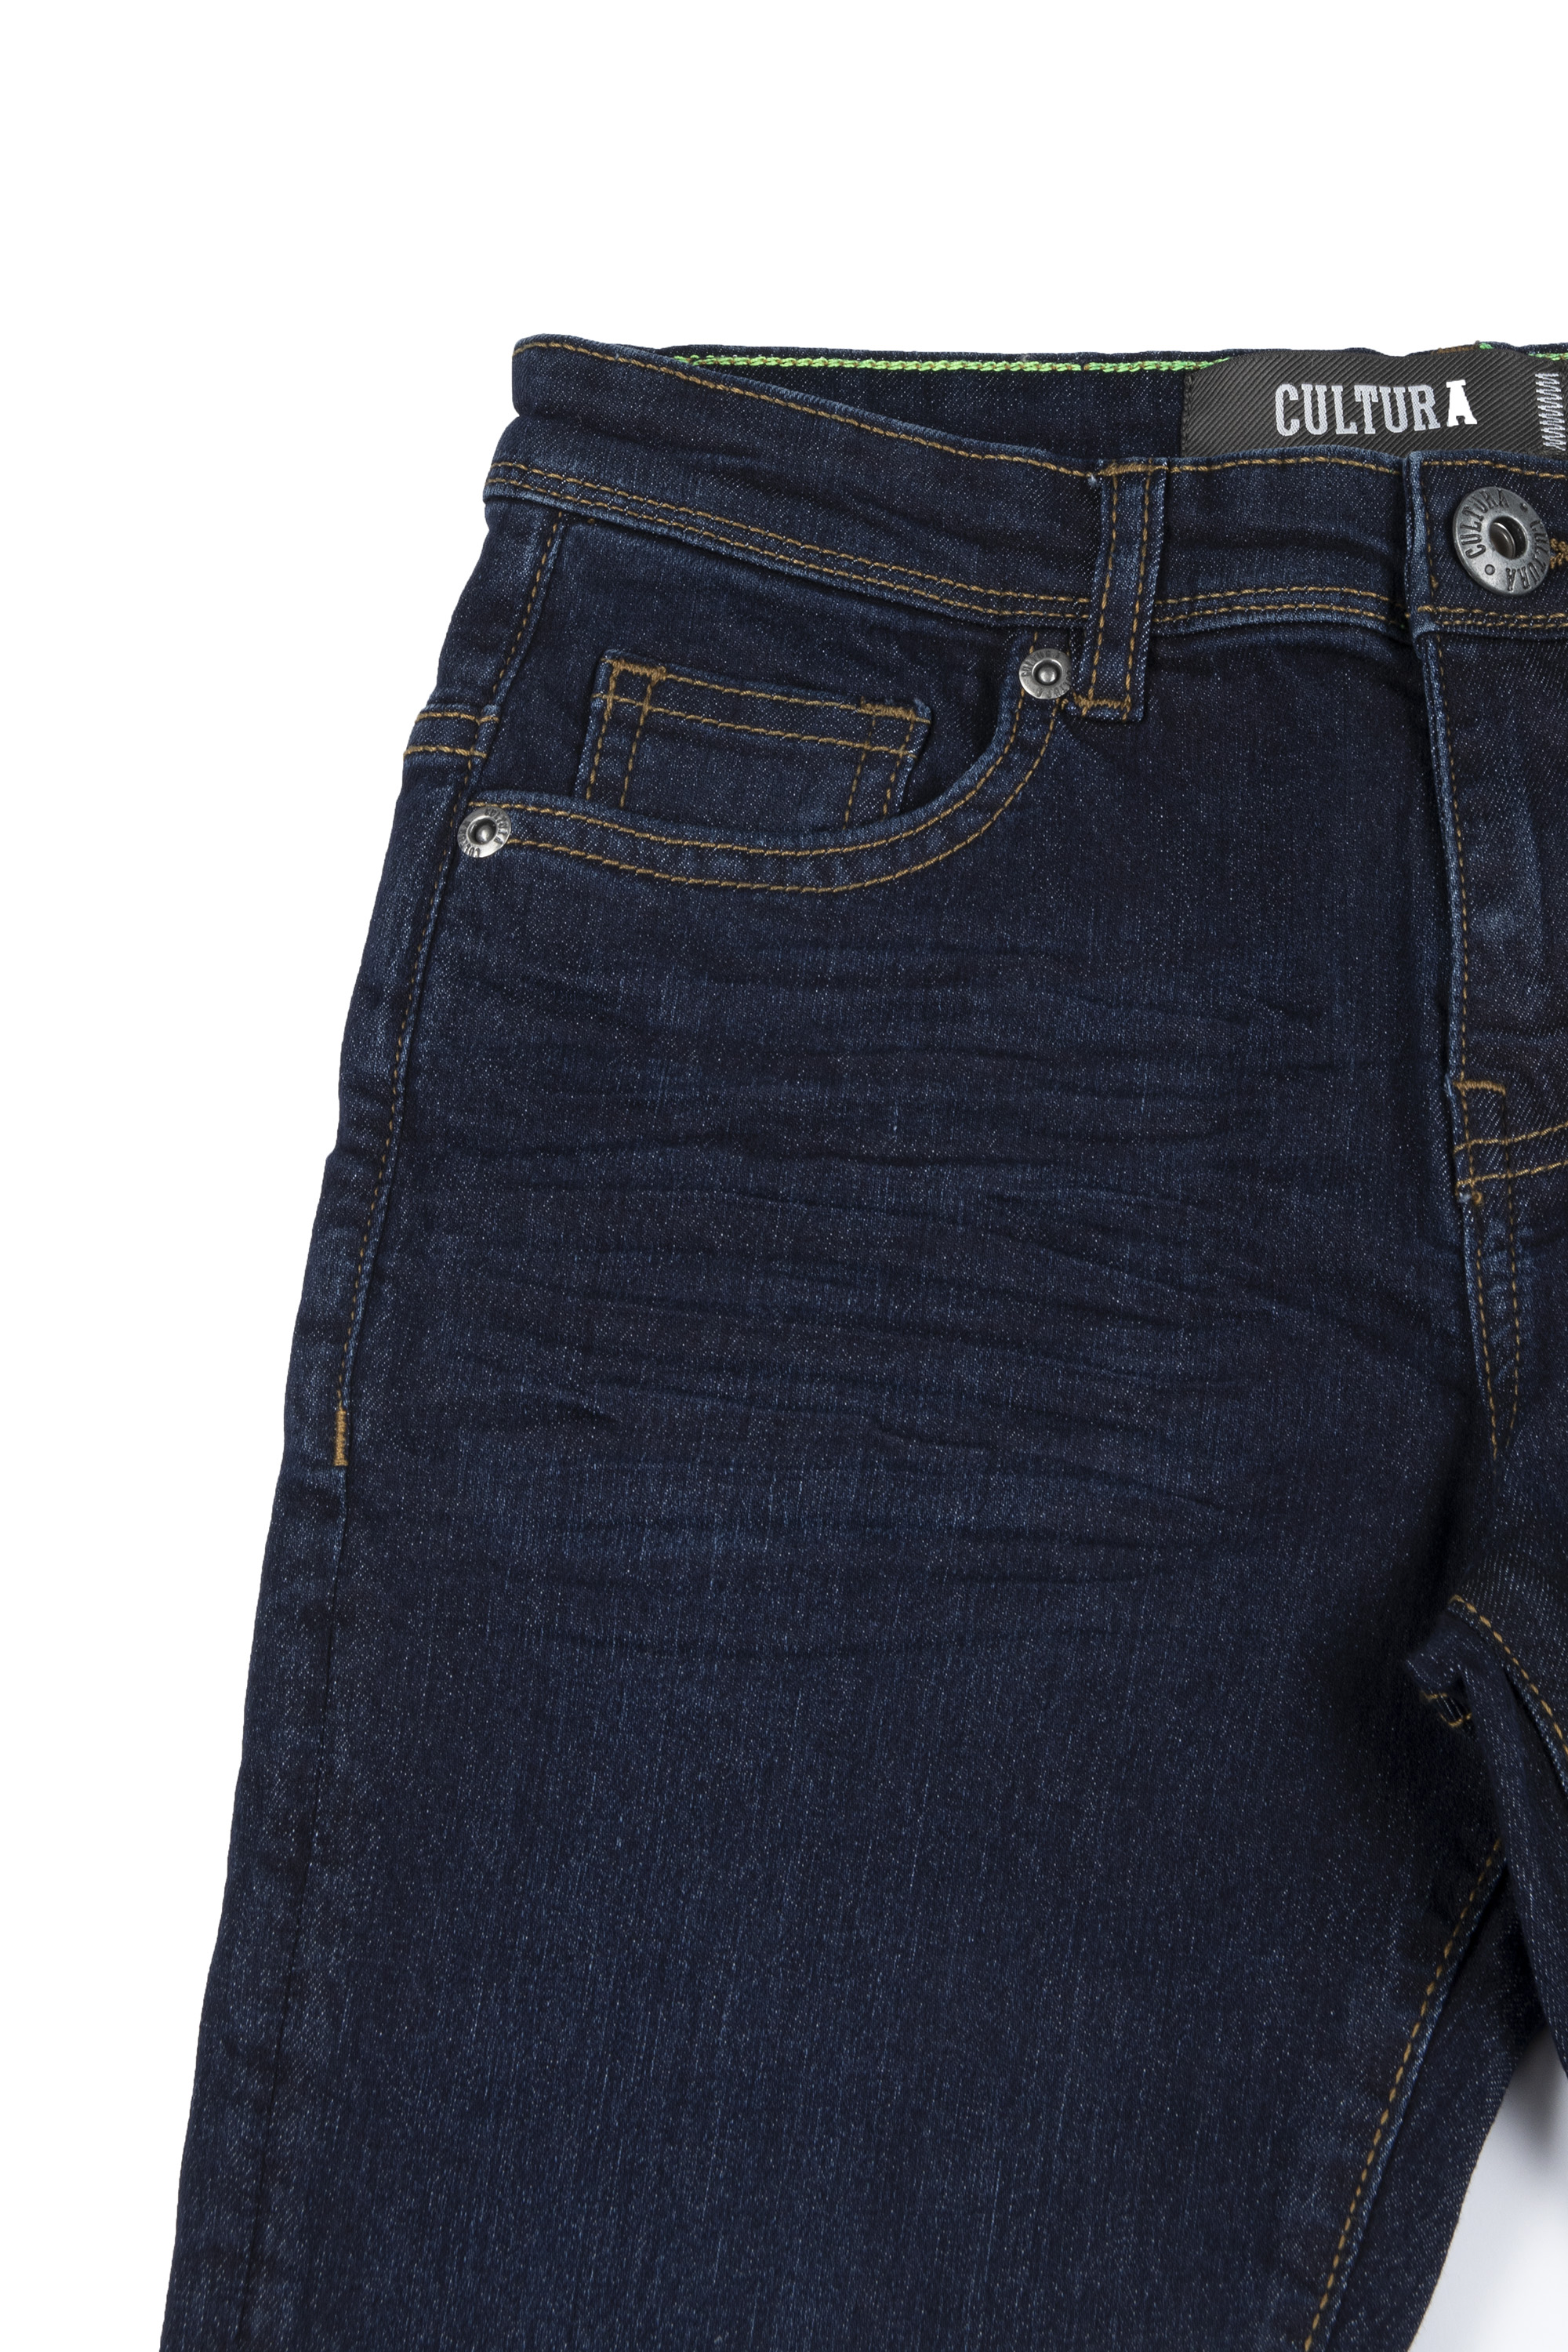 Dark Jeans 5 Denim Stretch Size CULTURA Wash Pants, Little for Blue 3-7, Boys Age Accent Comfy Stitch, Slim Skinny